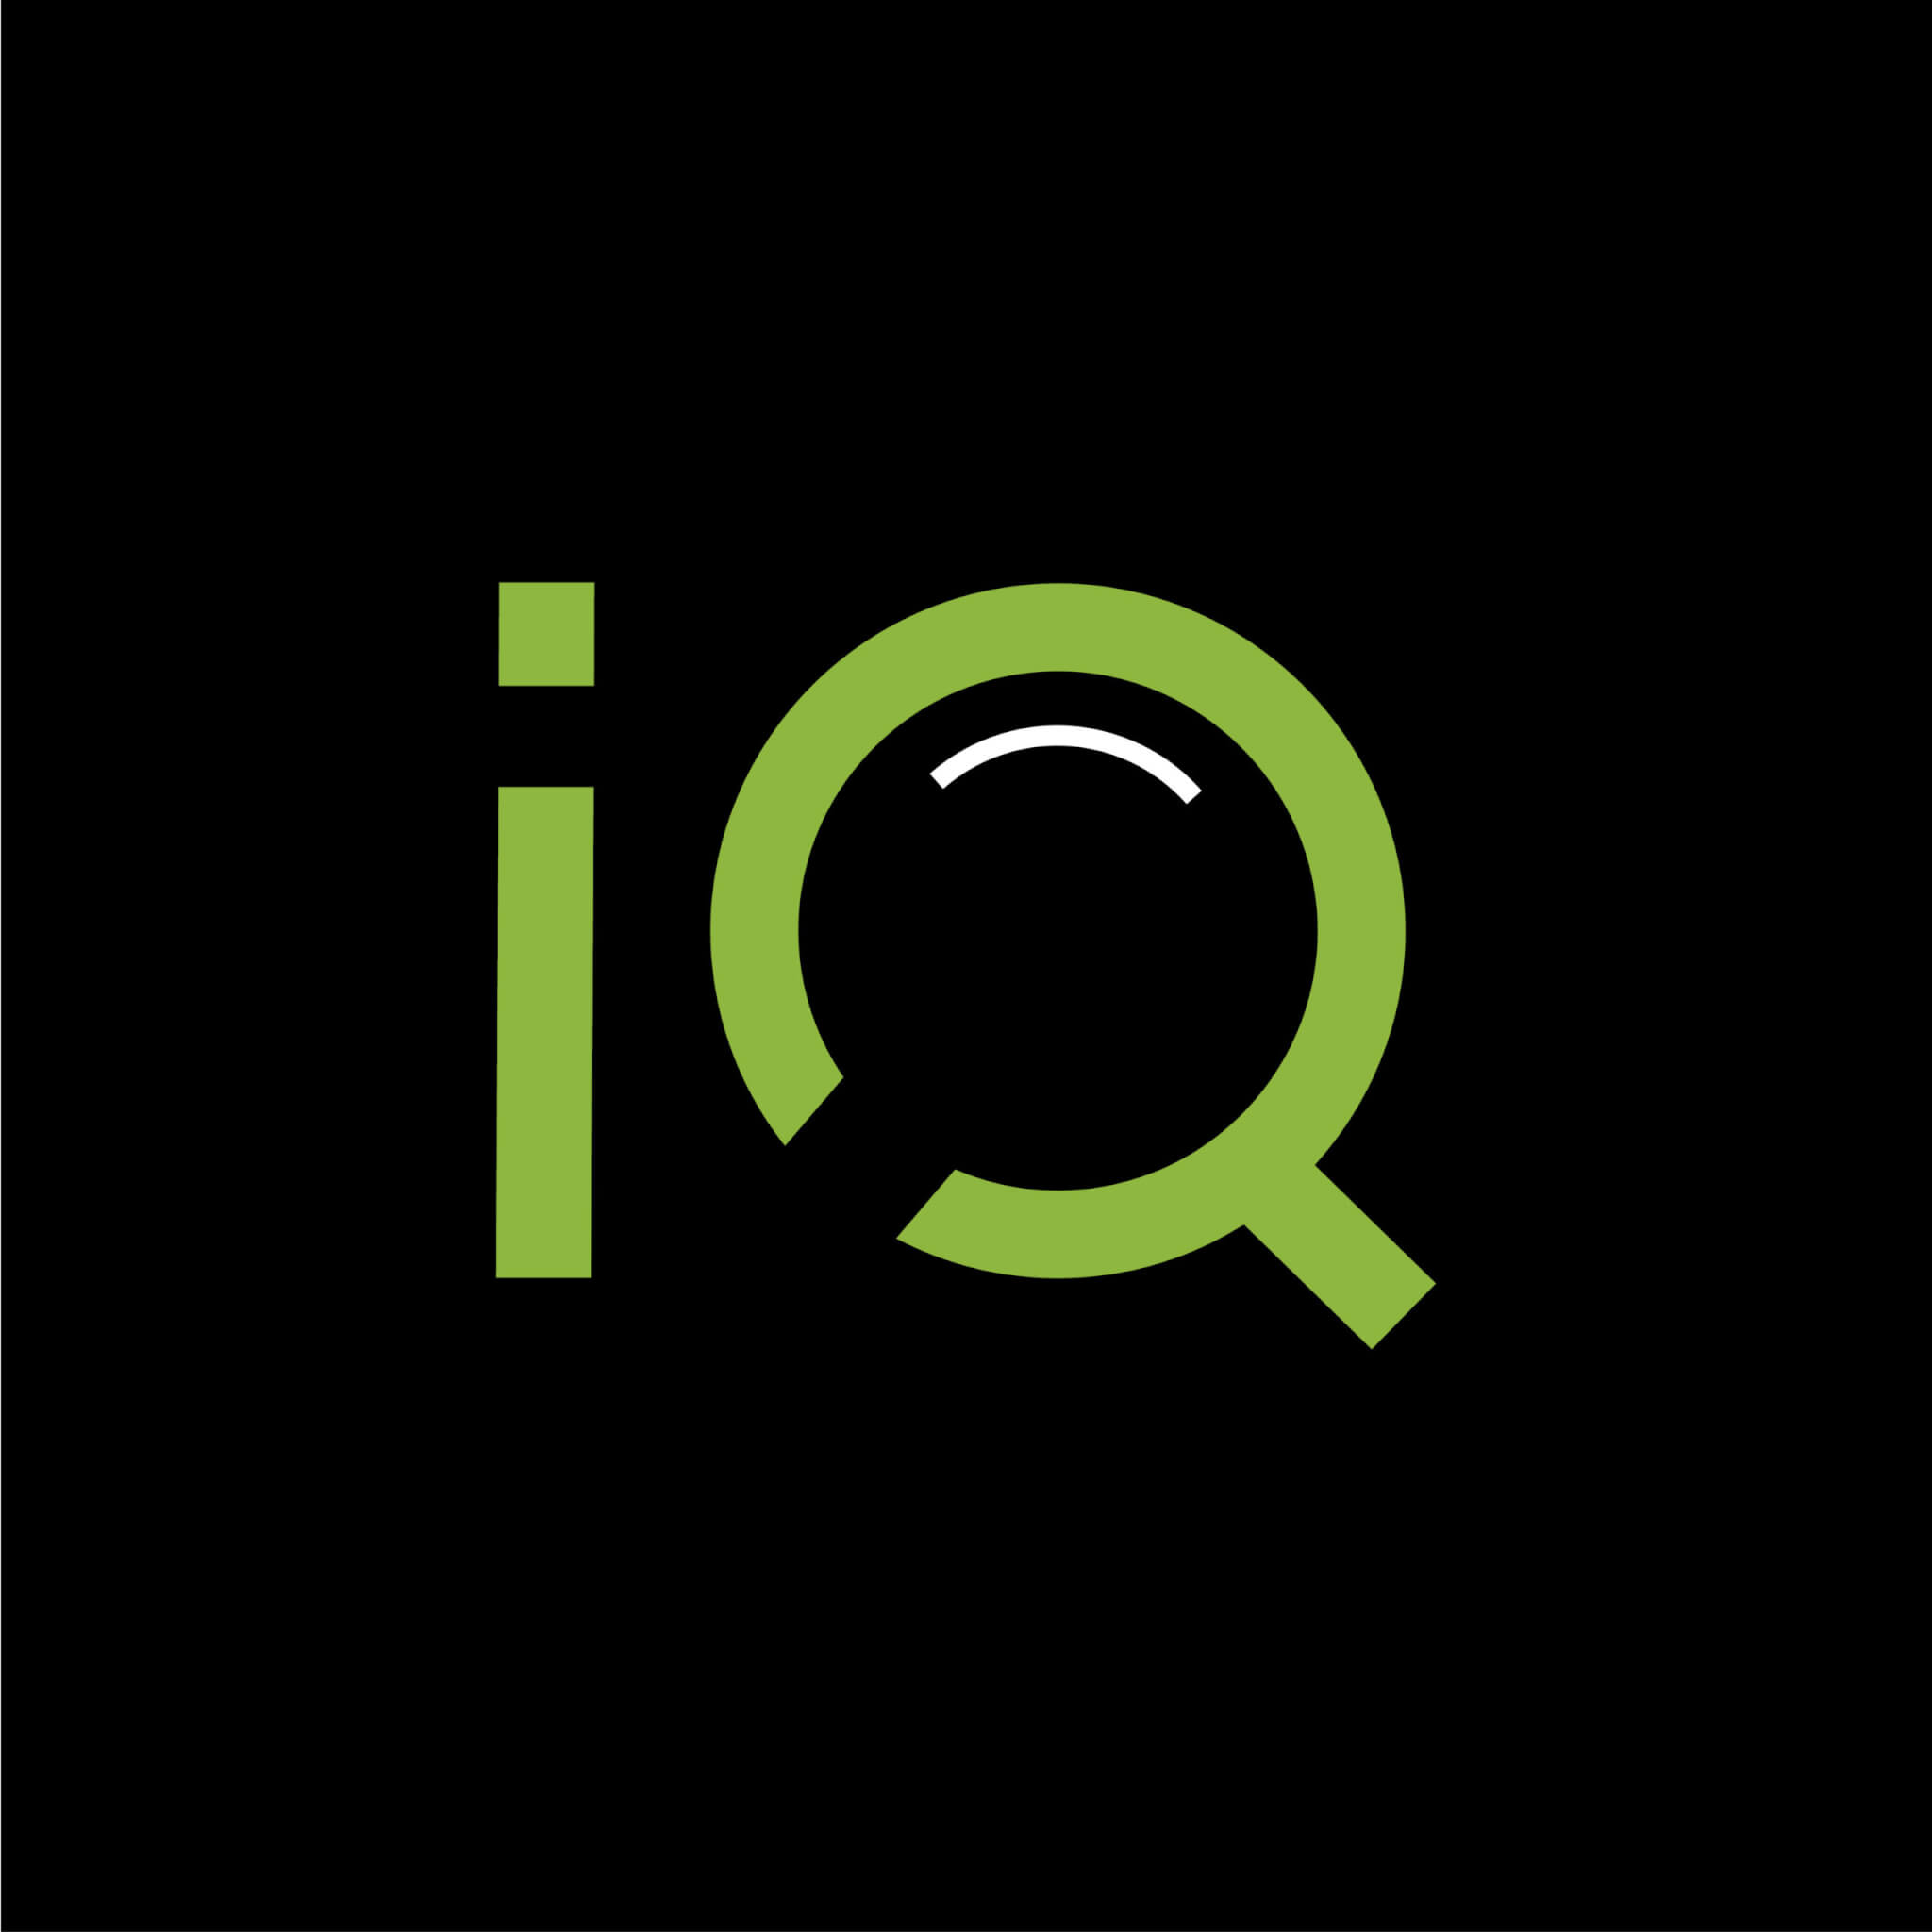 https://revenue-hub.com/wp-content/uploads/2020/12/HotelIQ_New_logo_Square-scaled.jpg